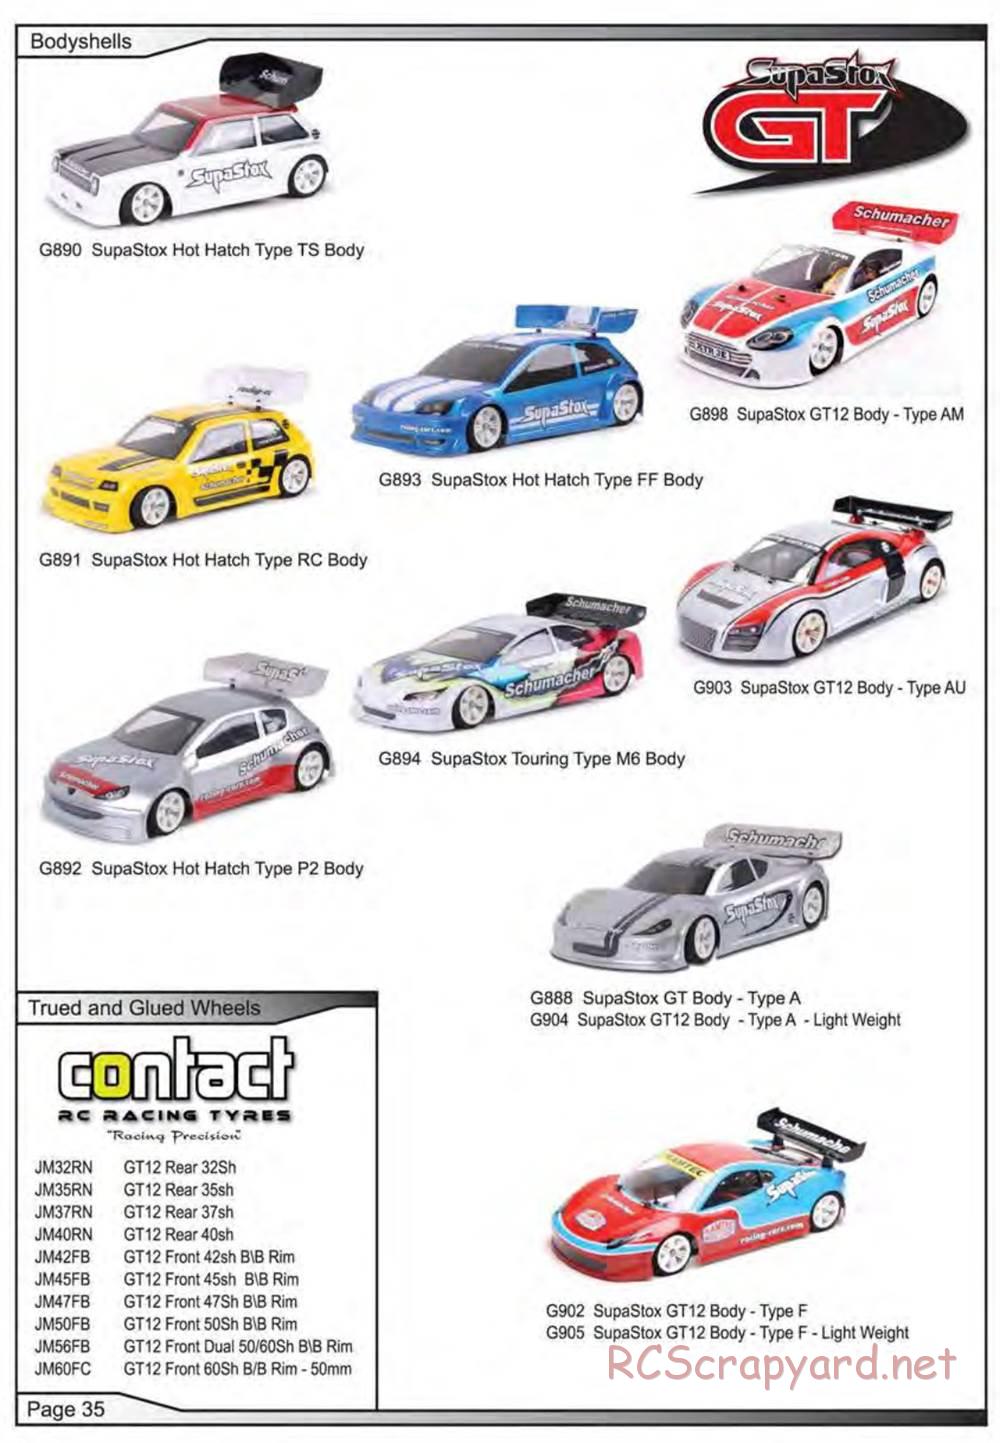 Schumacher - SupaStox GT - Manual - Page 36